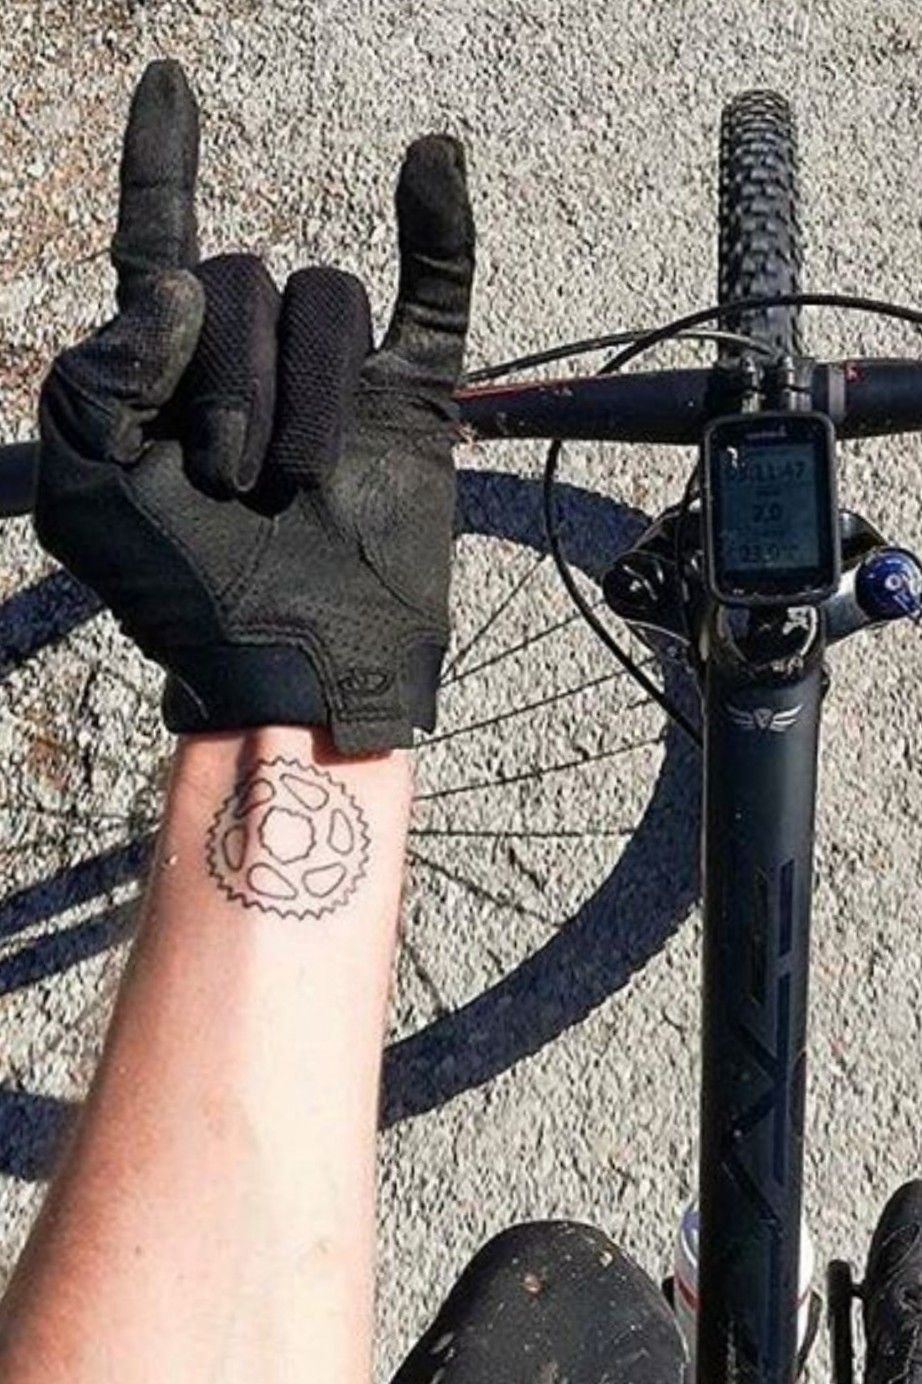 Tattoos of cyclists do you need any ideas